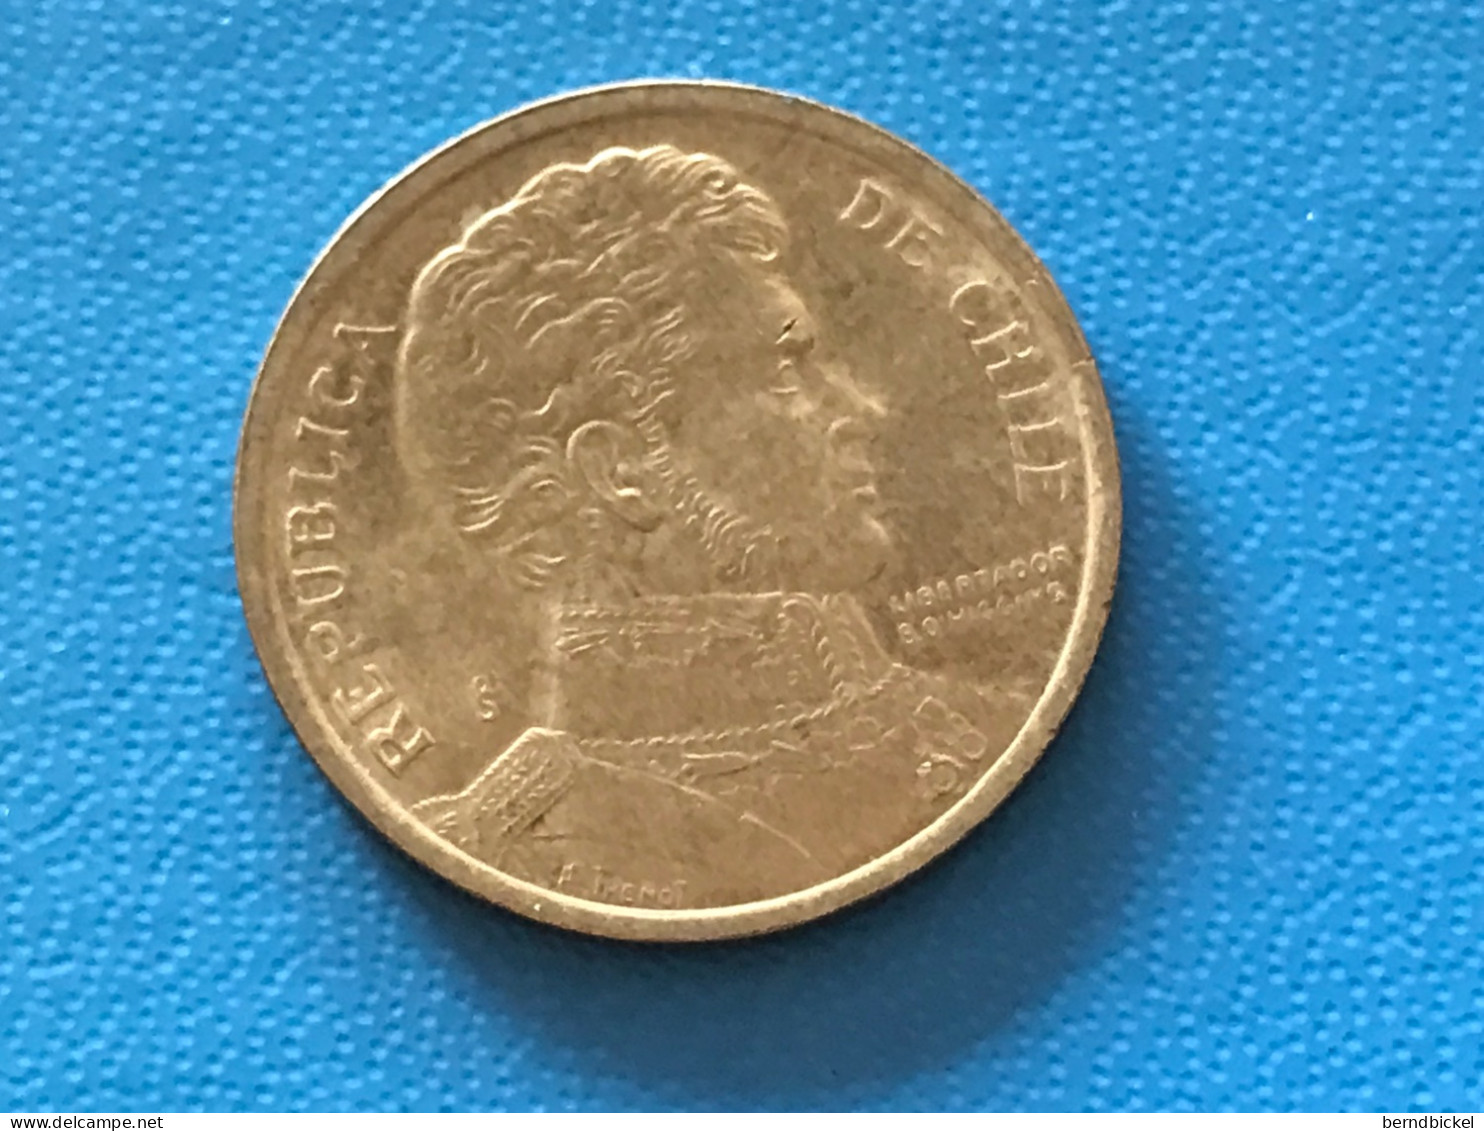 Münze Münzen Umlaufmünze Chile 10 Pesos 2006 - Chili